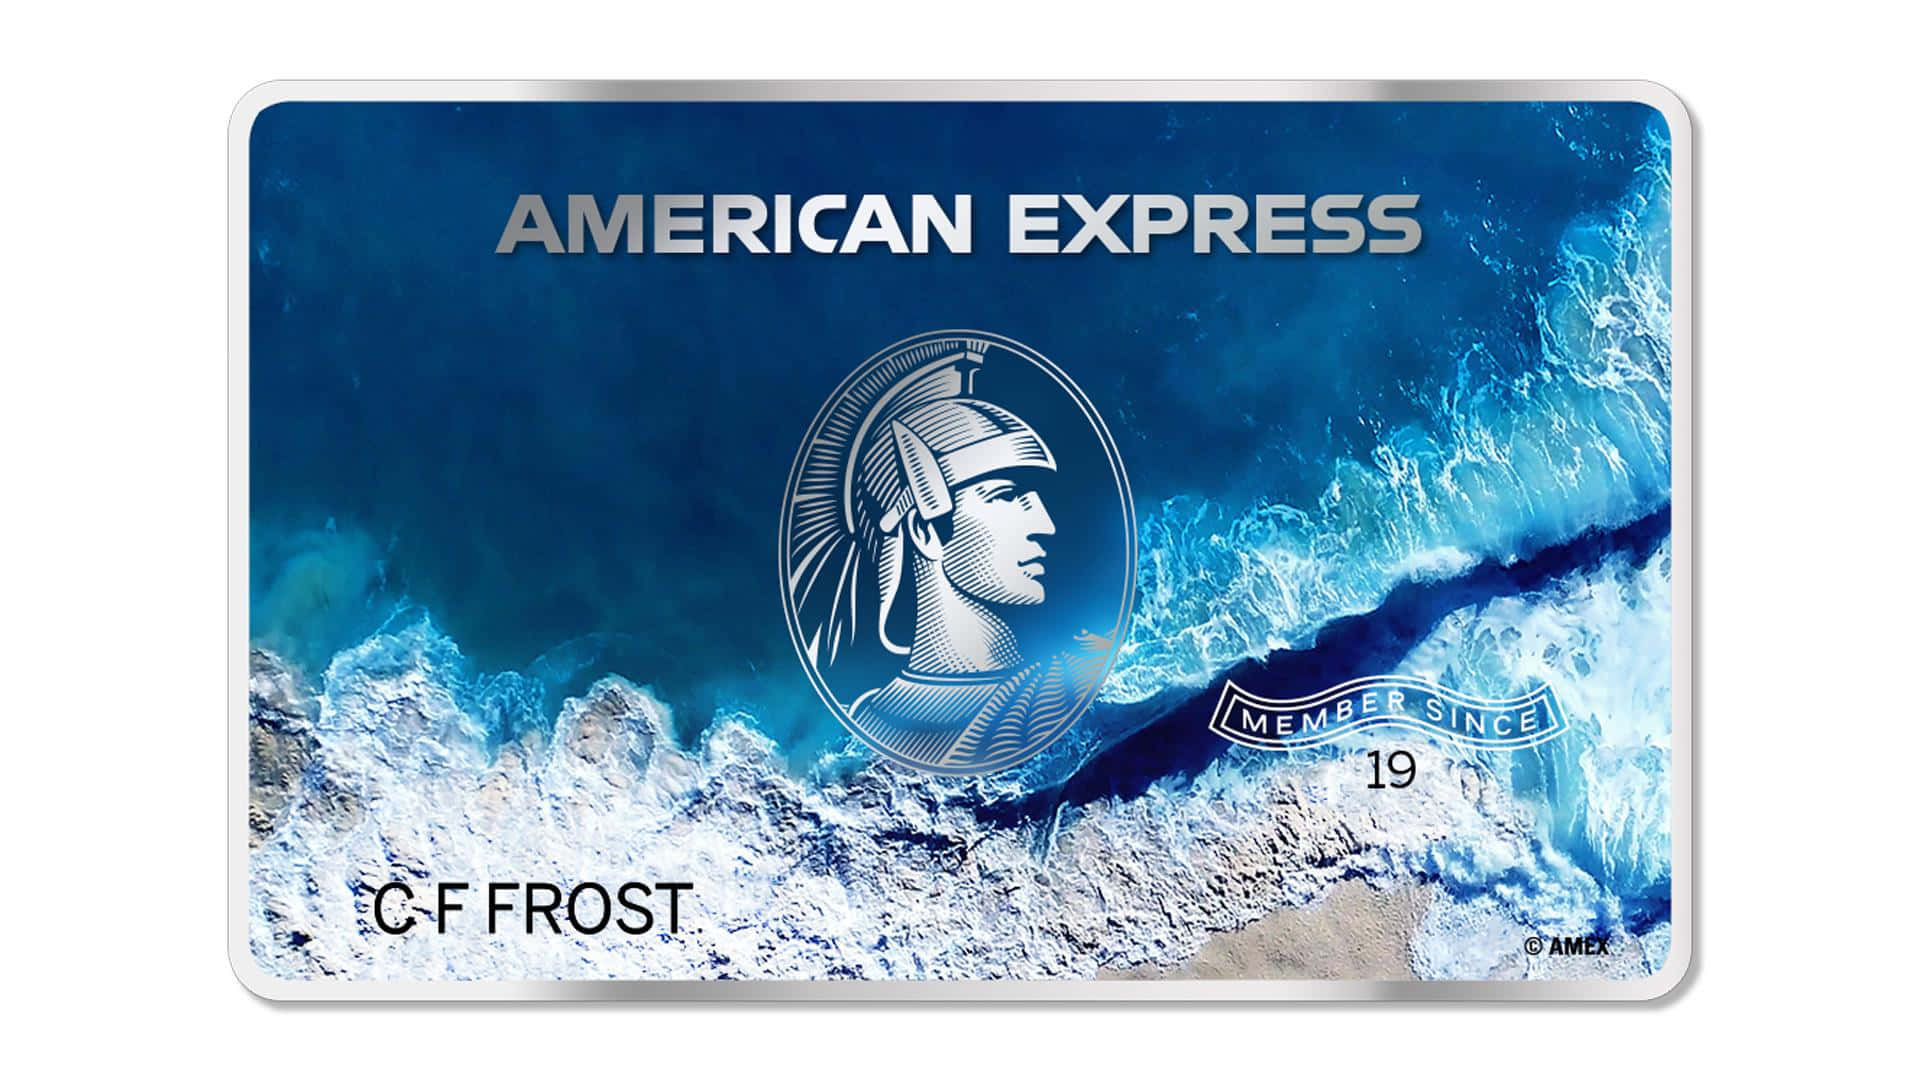 Startdin Finansielle Rejse Med American Express